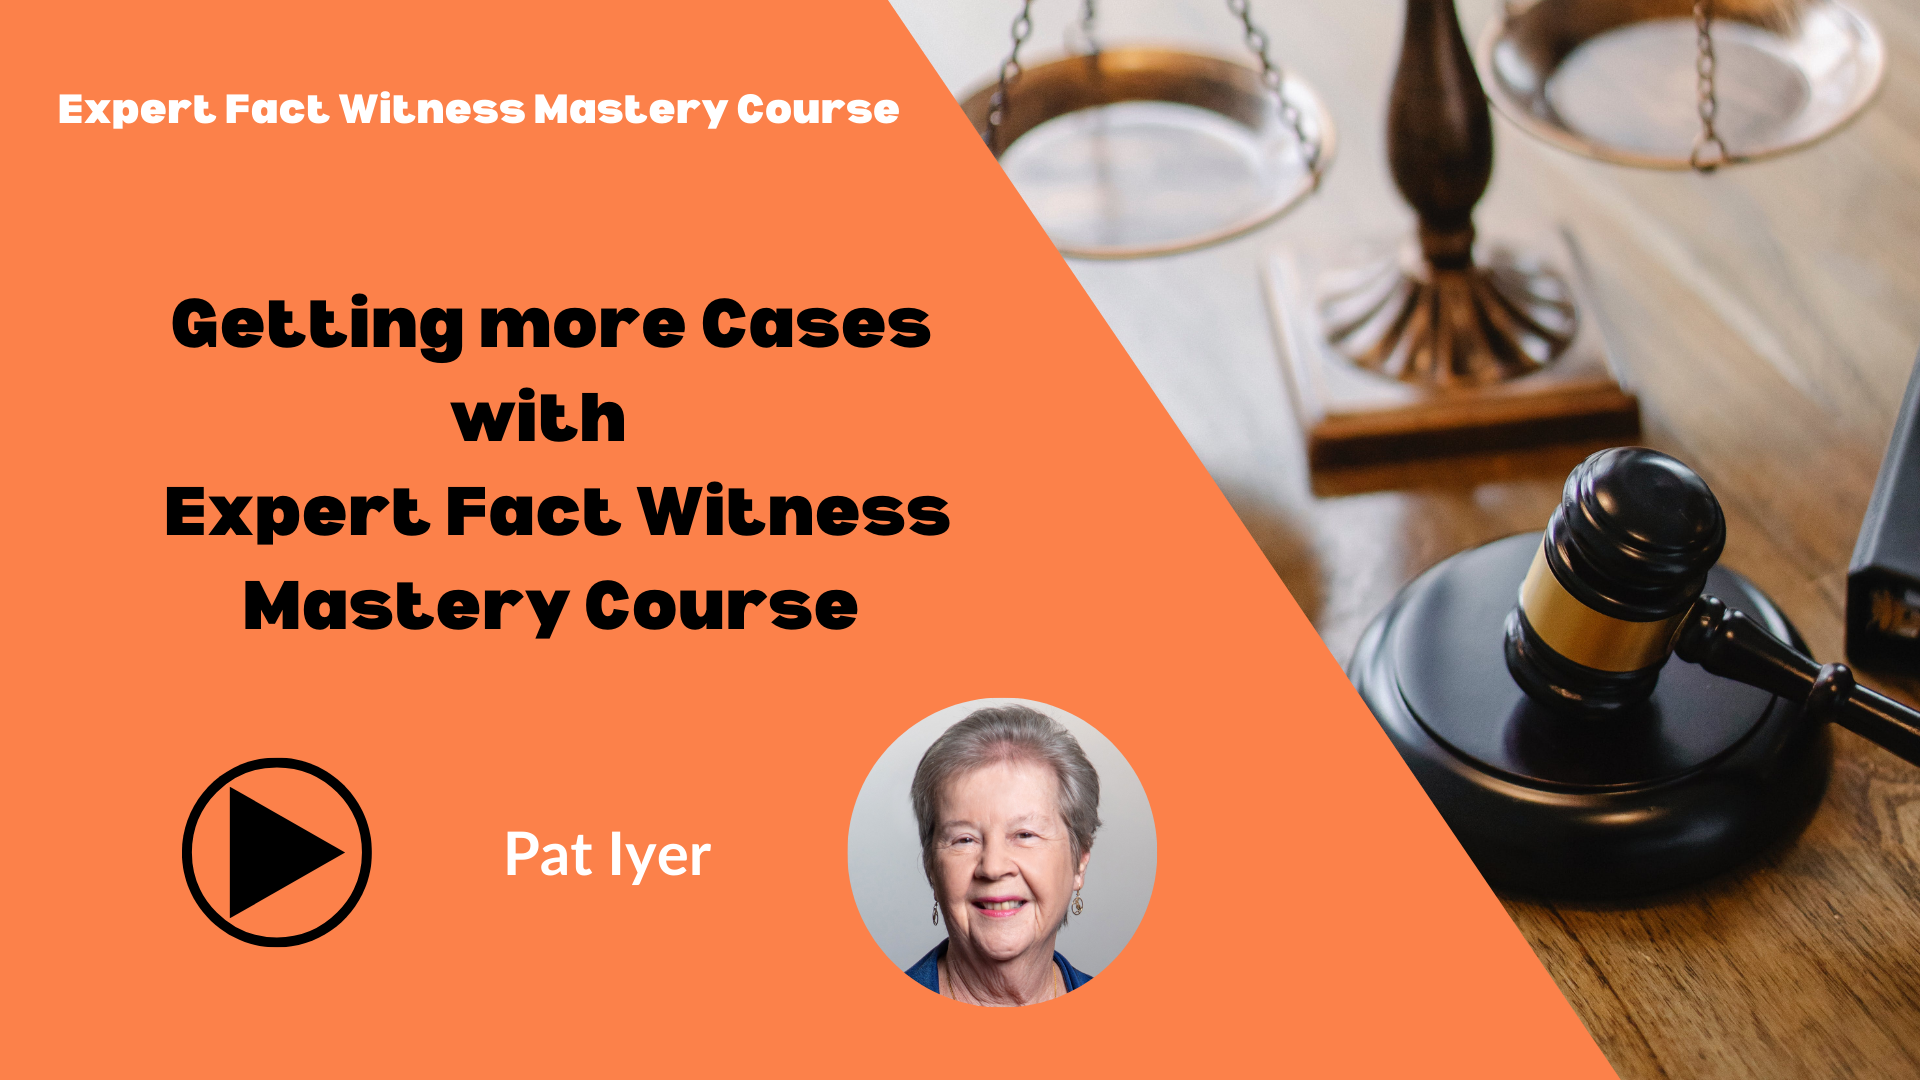 Pat Iyer - Expert Fact Witness Mastery